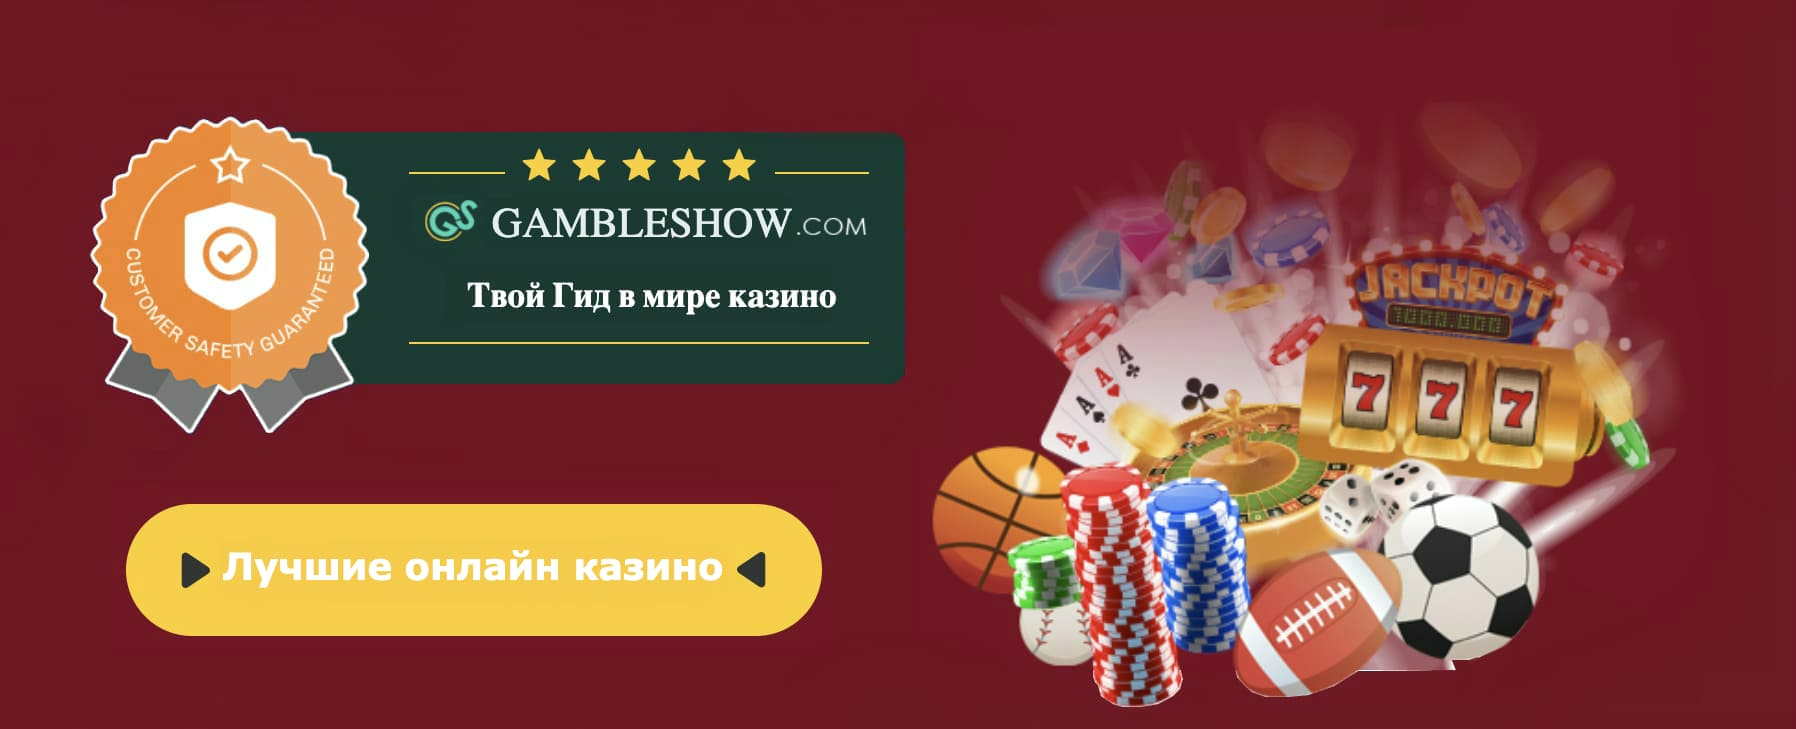 Casino solverde jogos online gratis